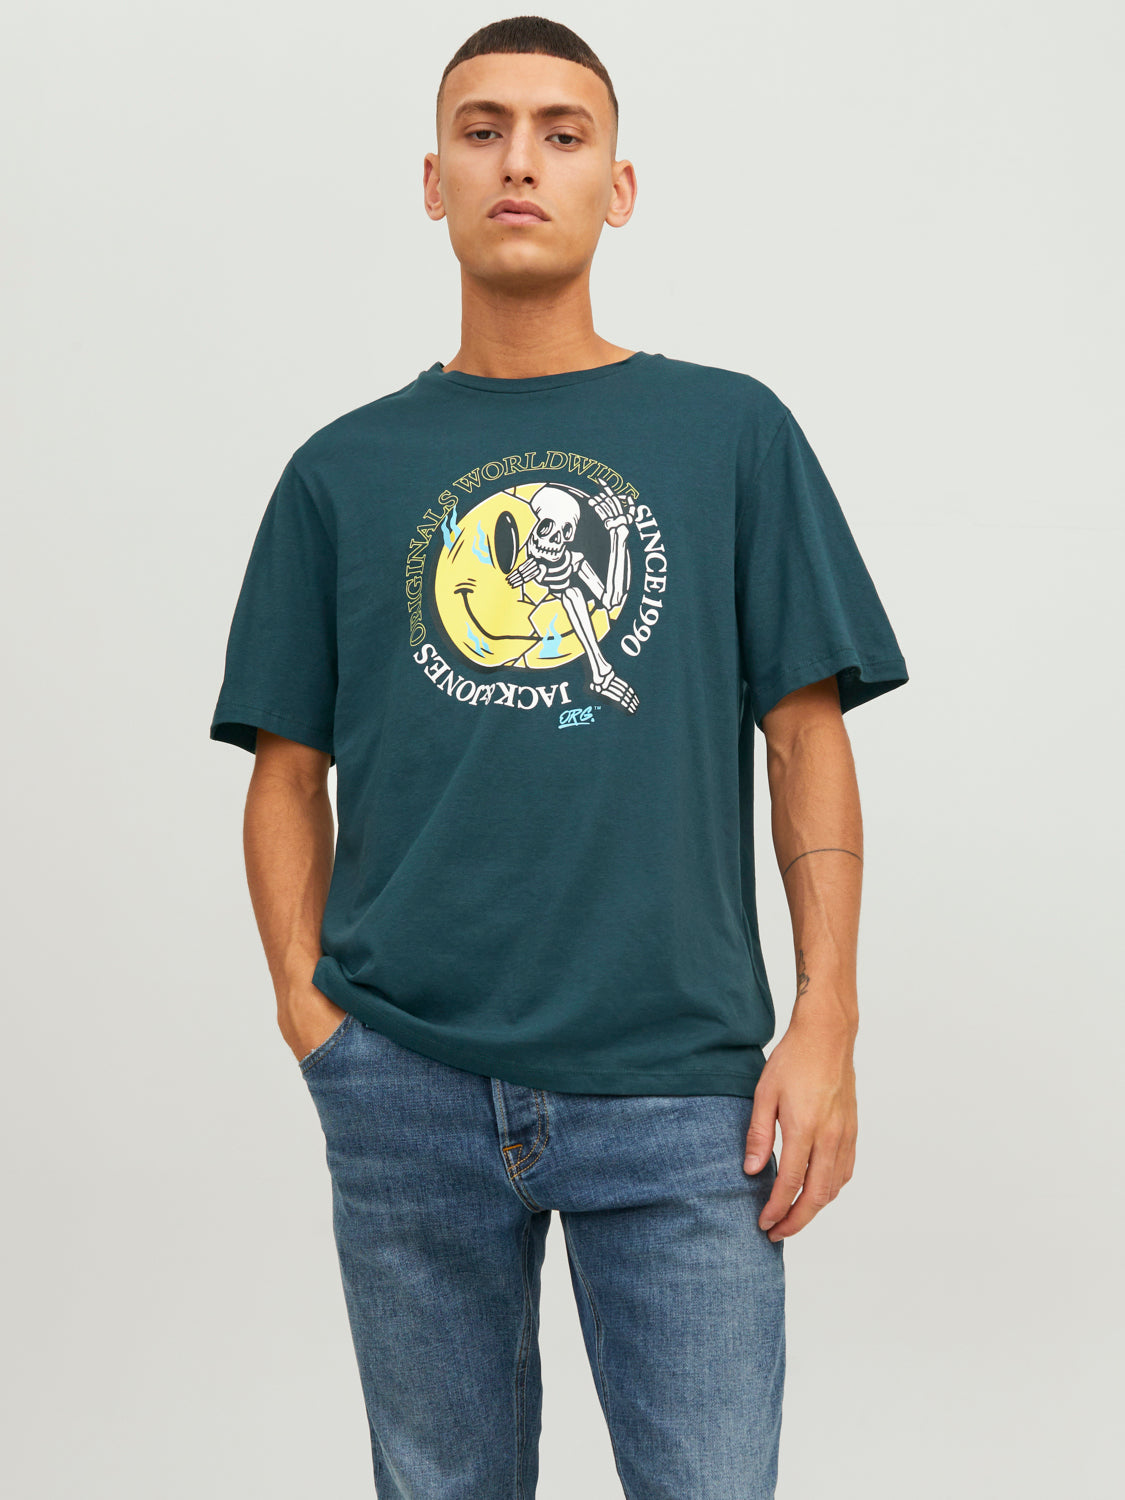 Camiseta de manga corta- JORAFTERLIFE Verde oscuro